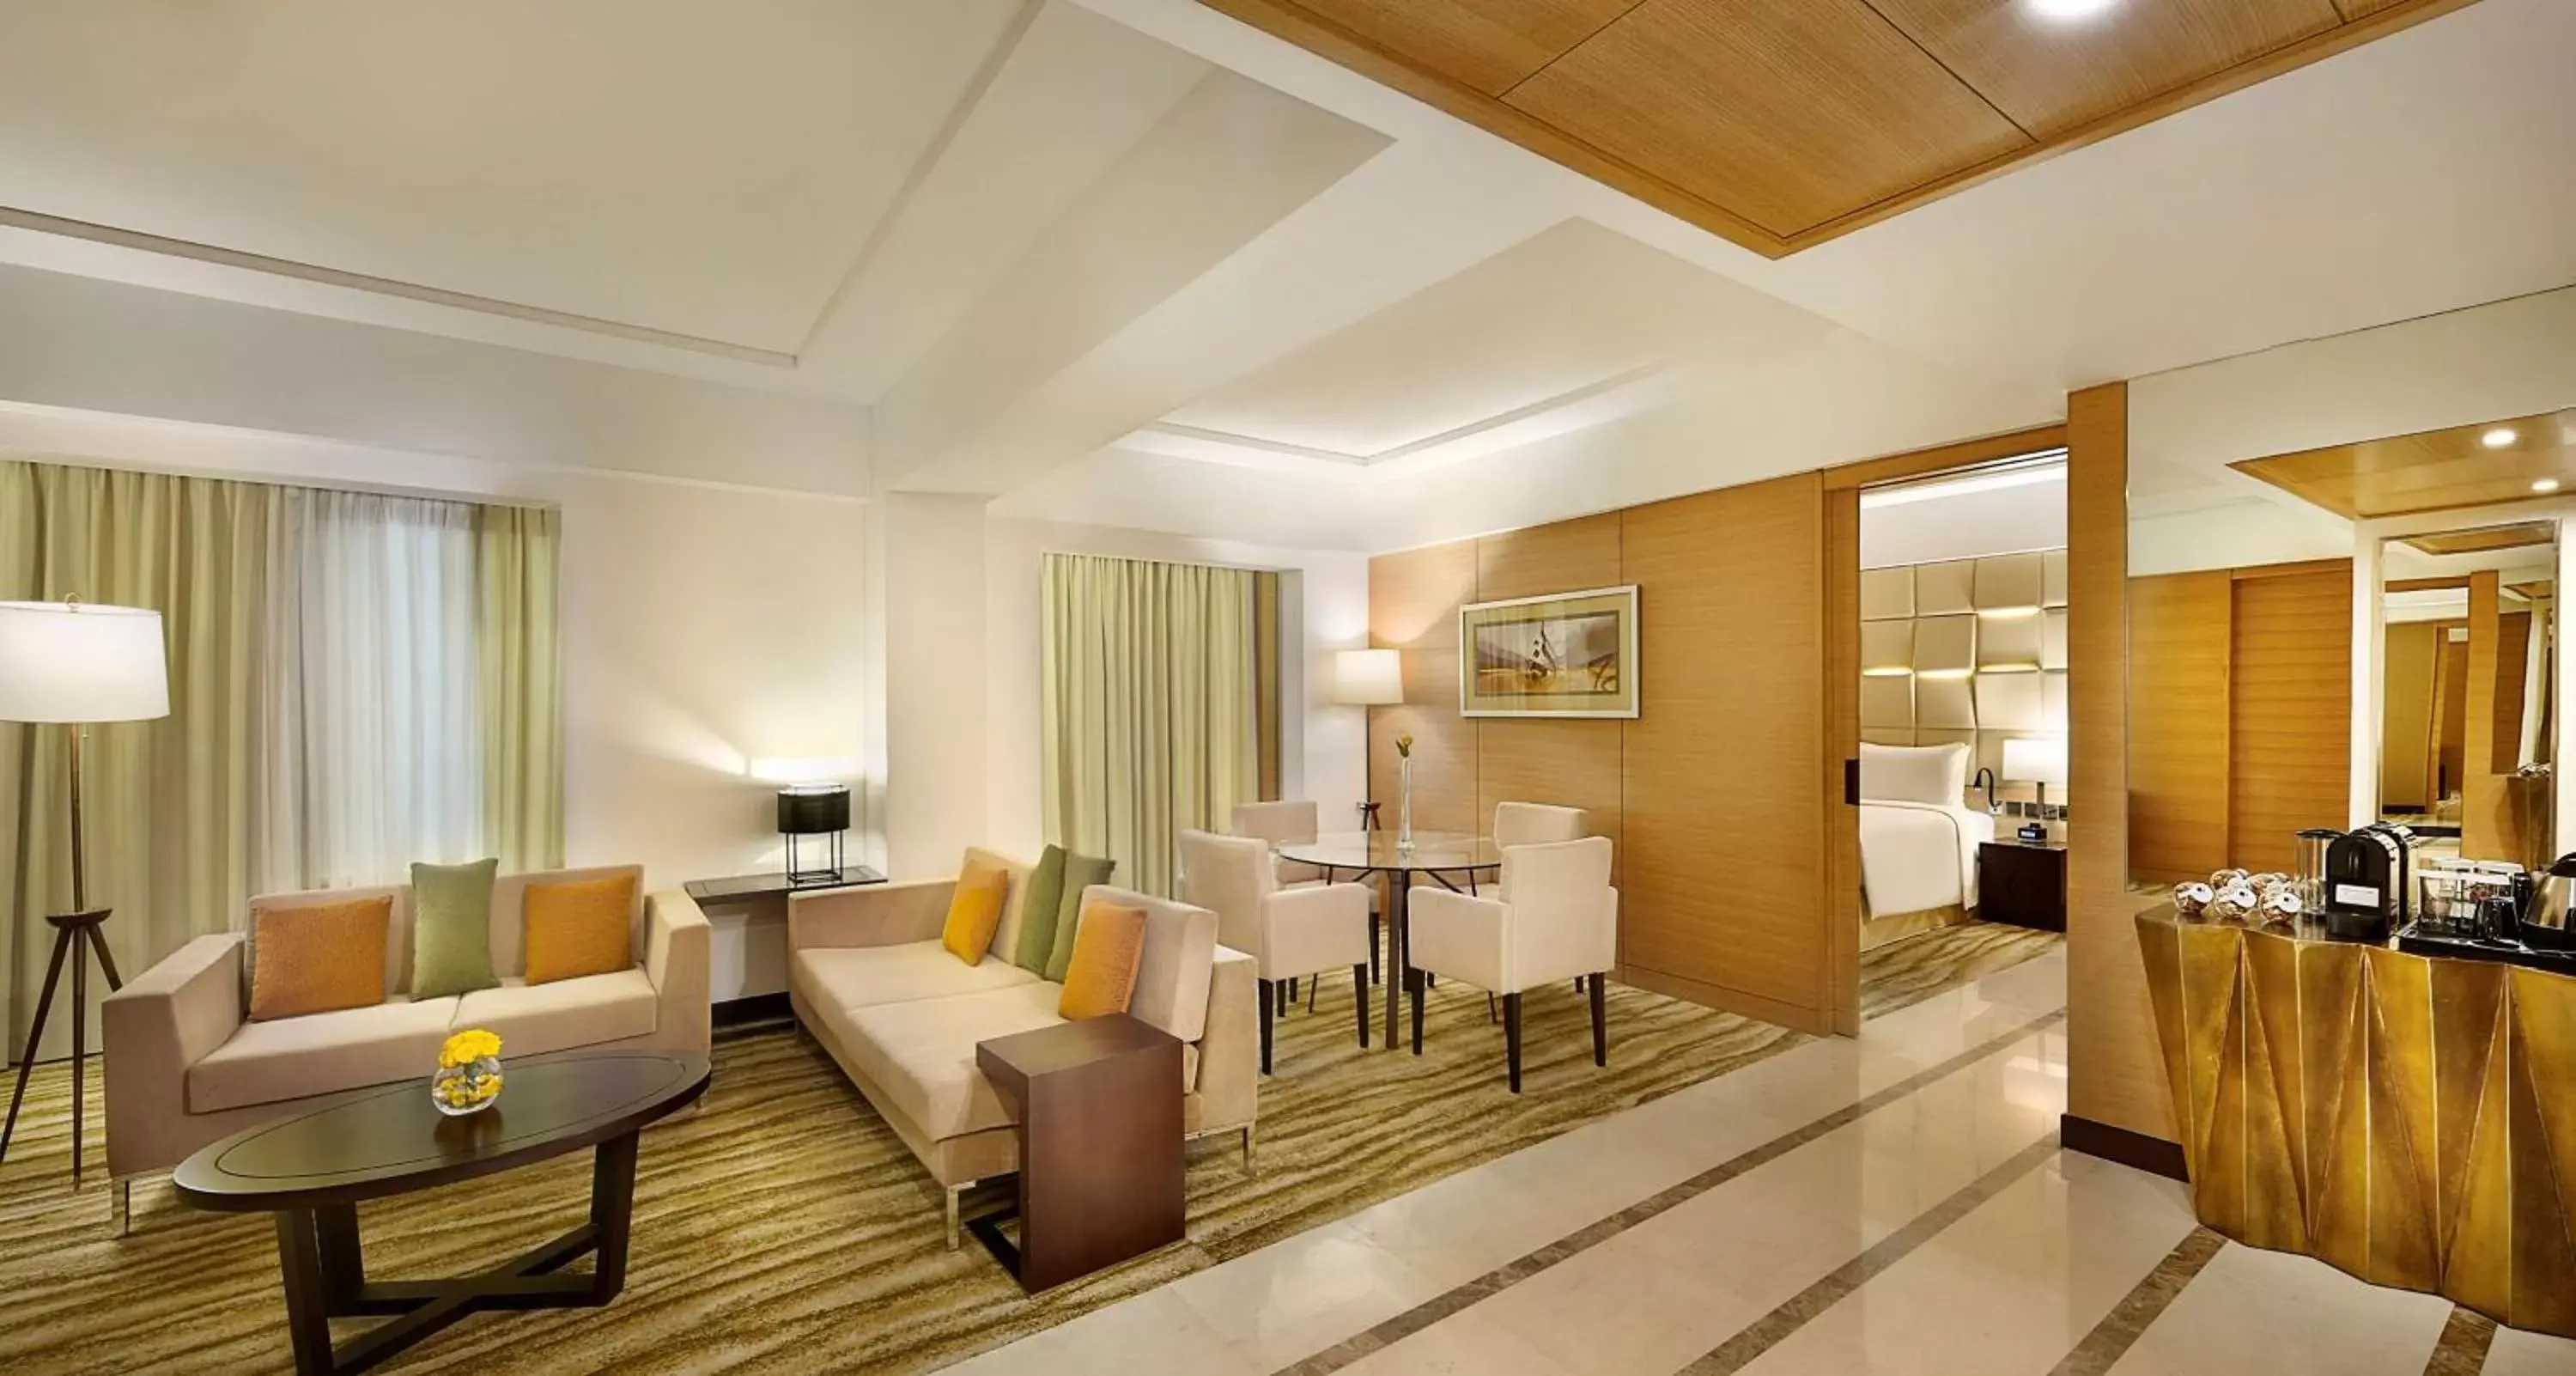 Other, Seating Area in DoubleTree by Hilton Hotel Riyadh - Al Muroj Business Gate